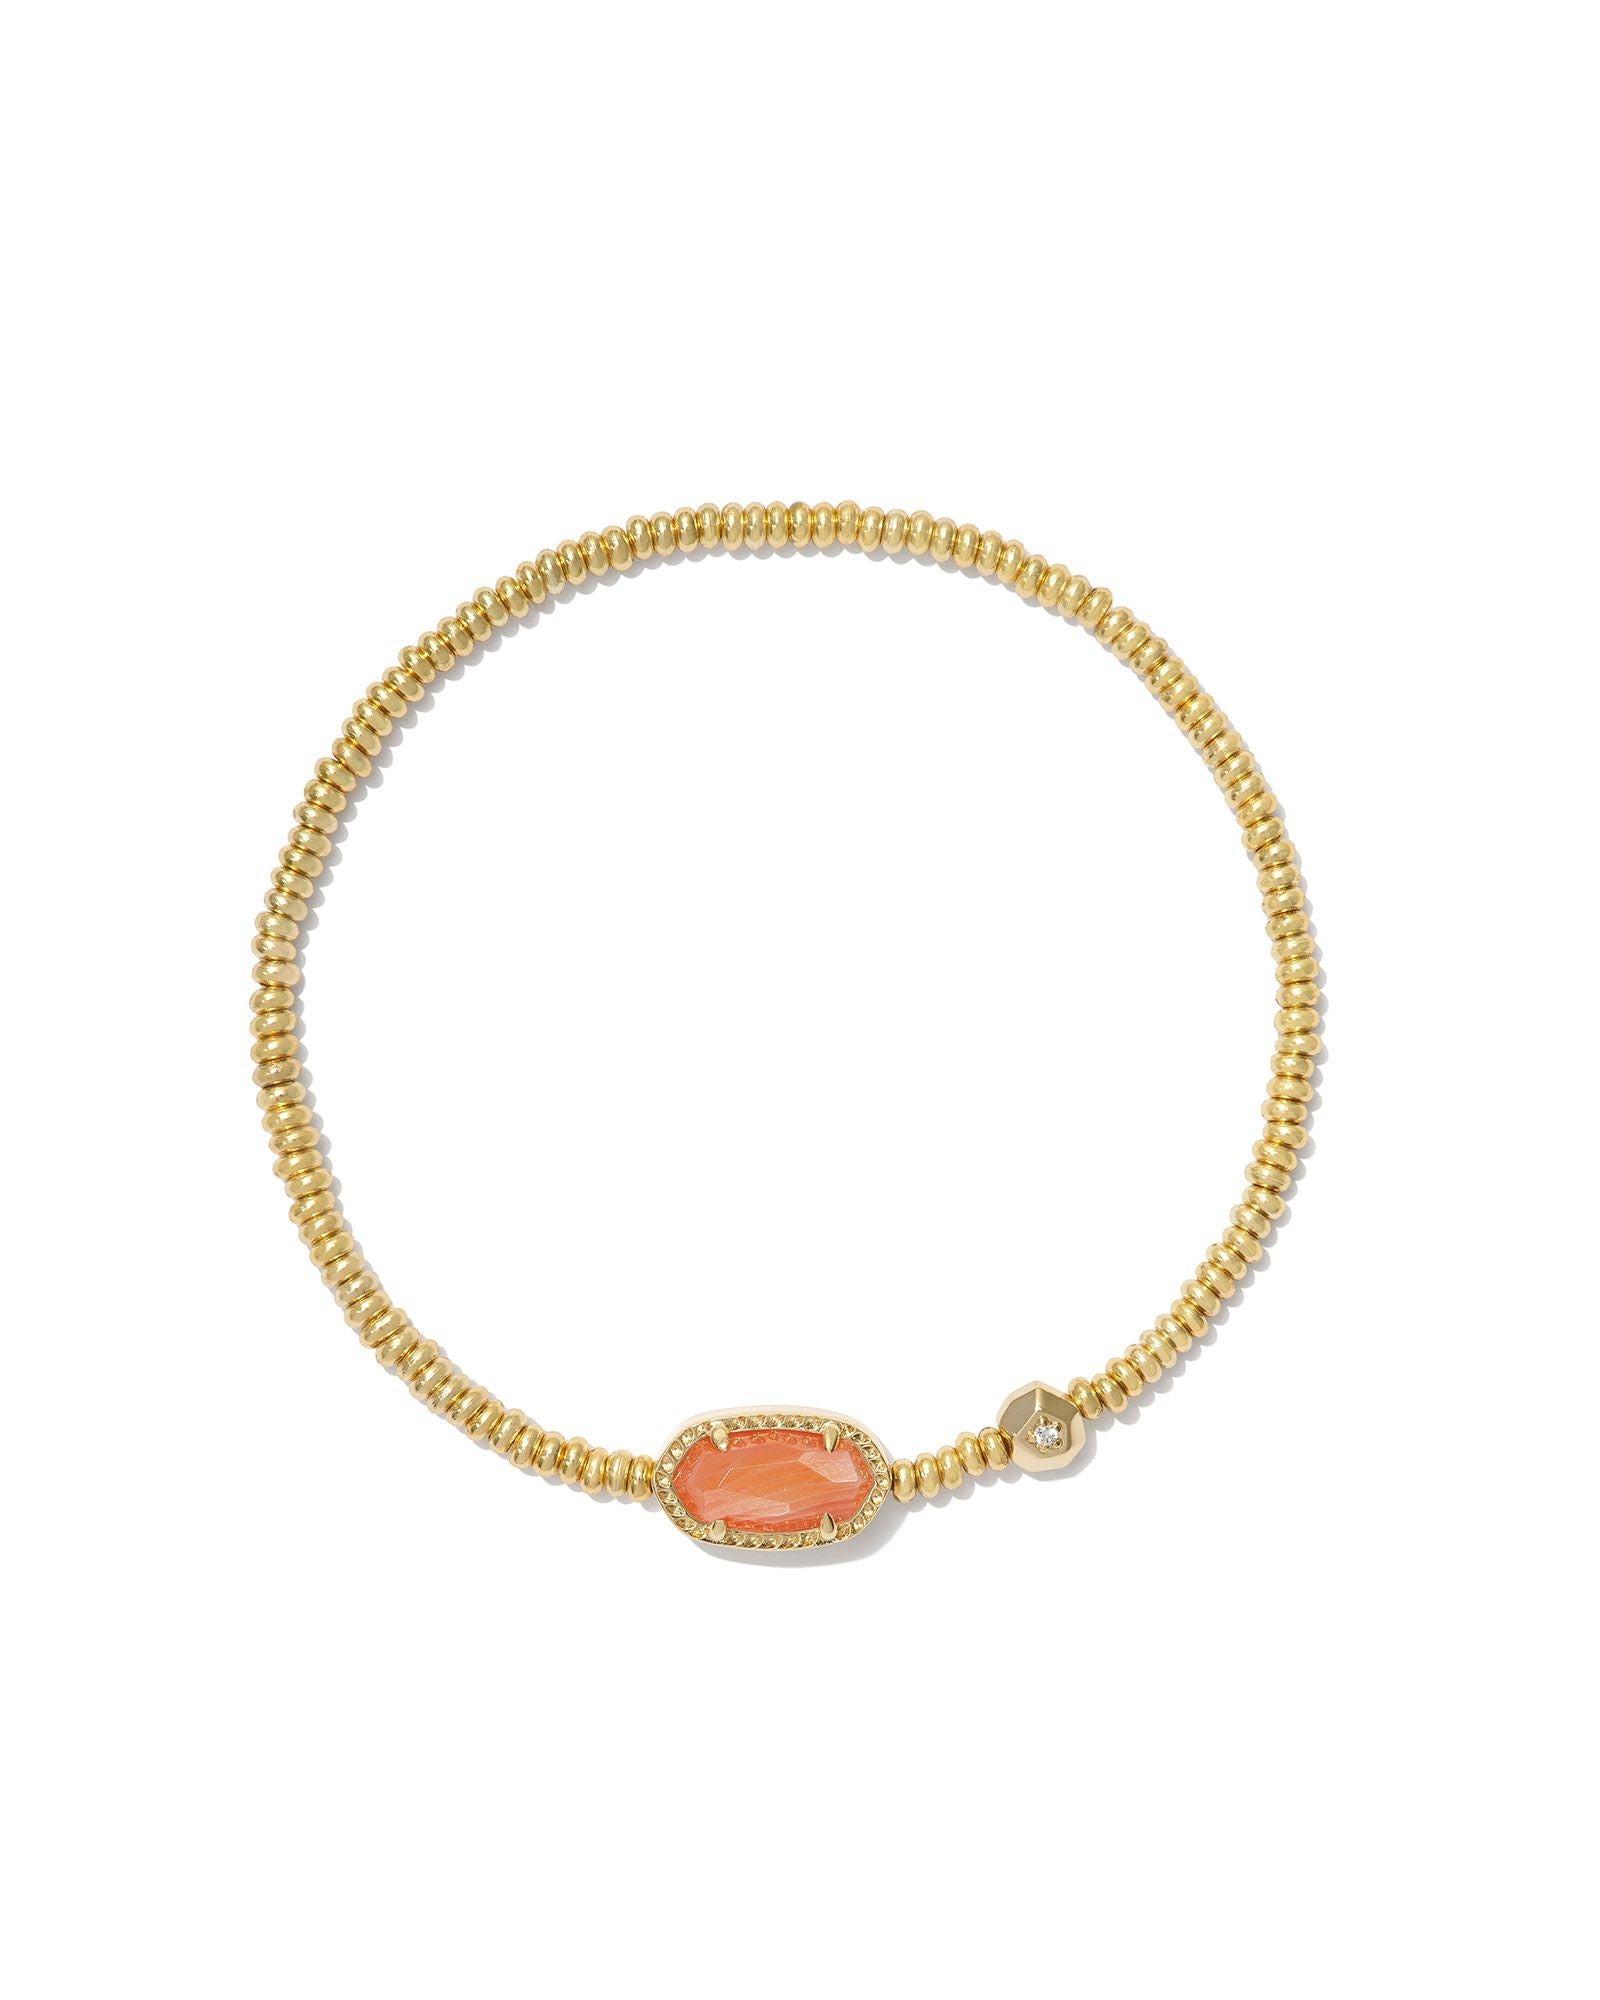 Grayson Stretch Bracelet in Gold Orange Banded Agate